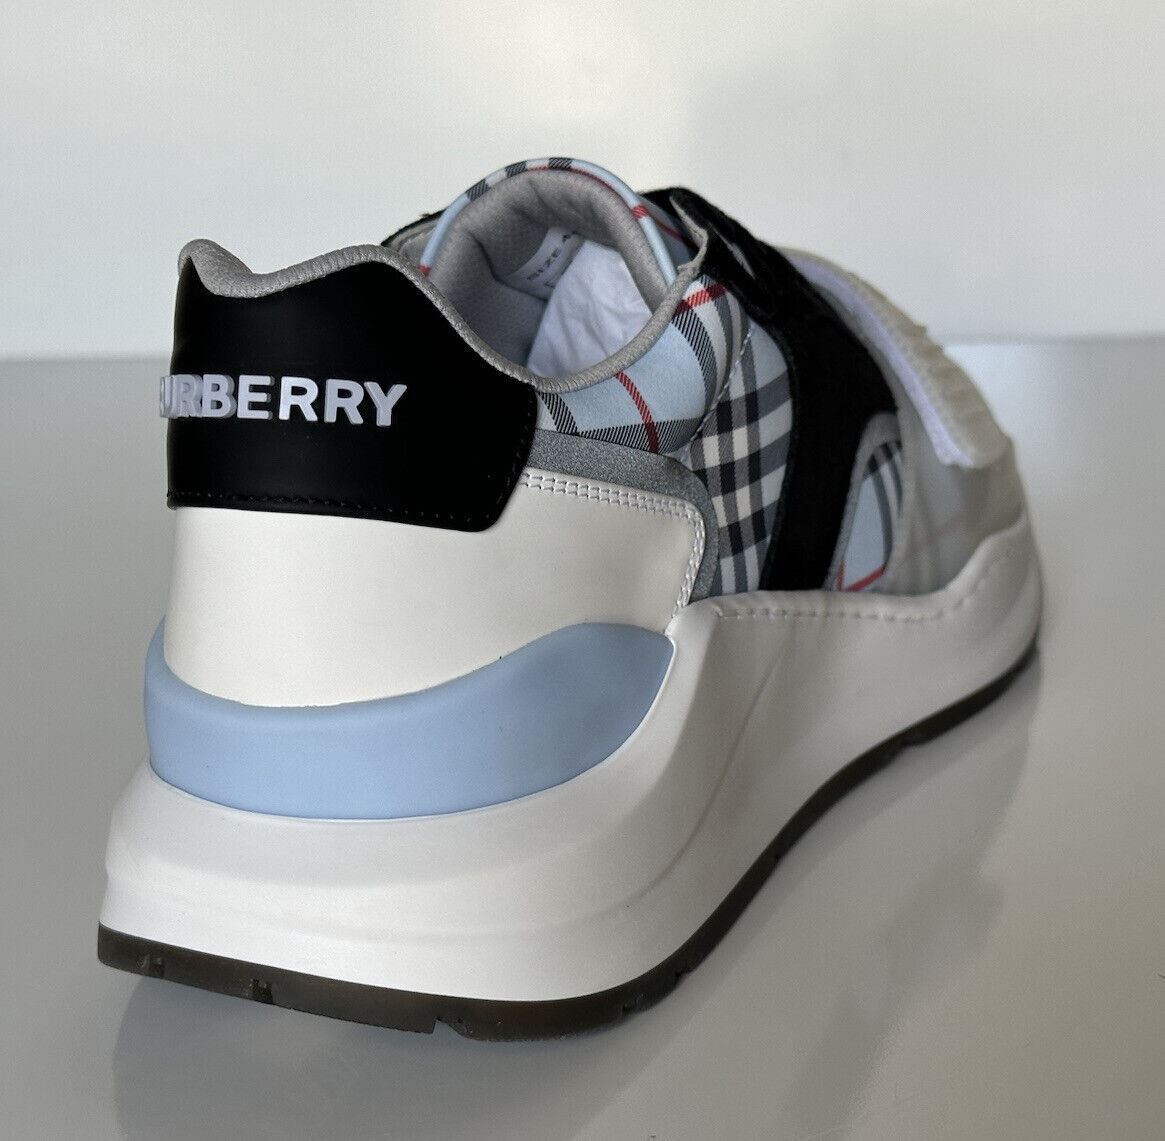 Мужские кроссовки Burberry Ramsey Pale Blue за 790 долларов США 12 США (45 евро) 8051415 IT 